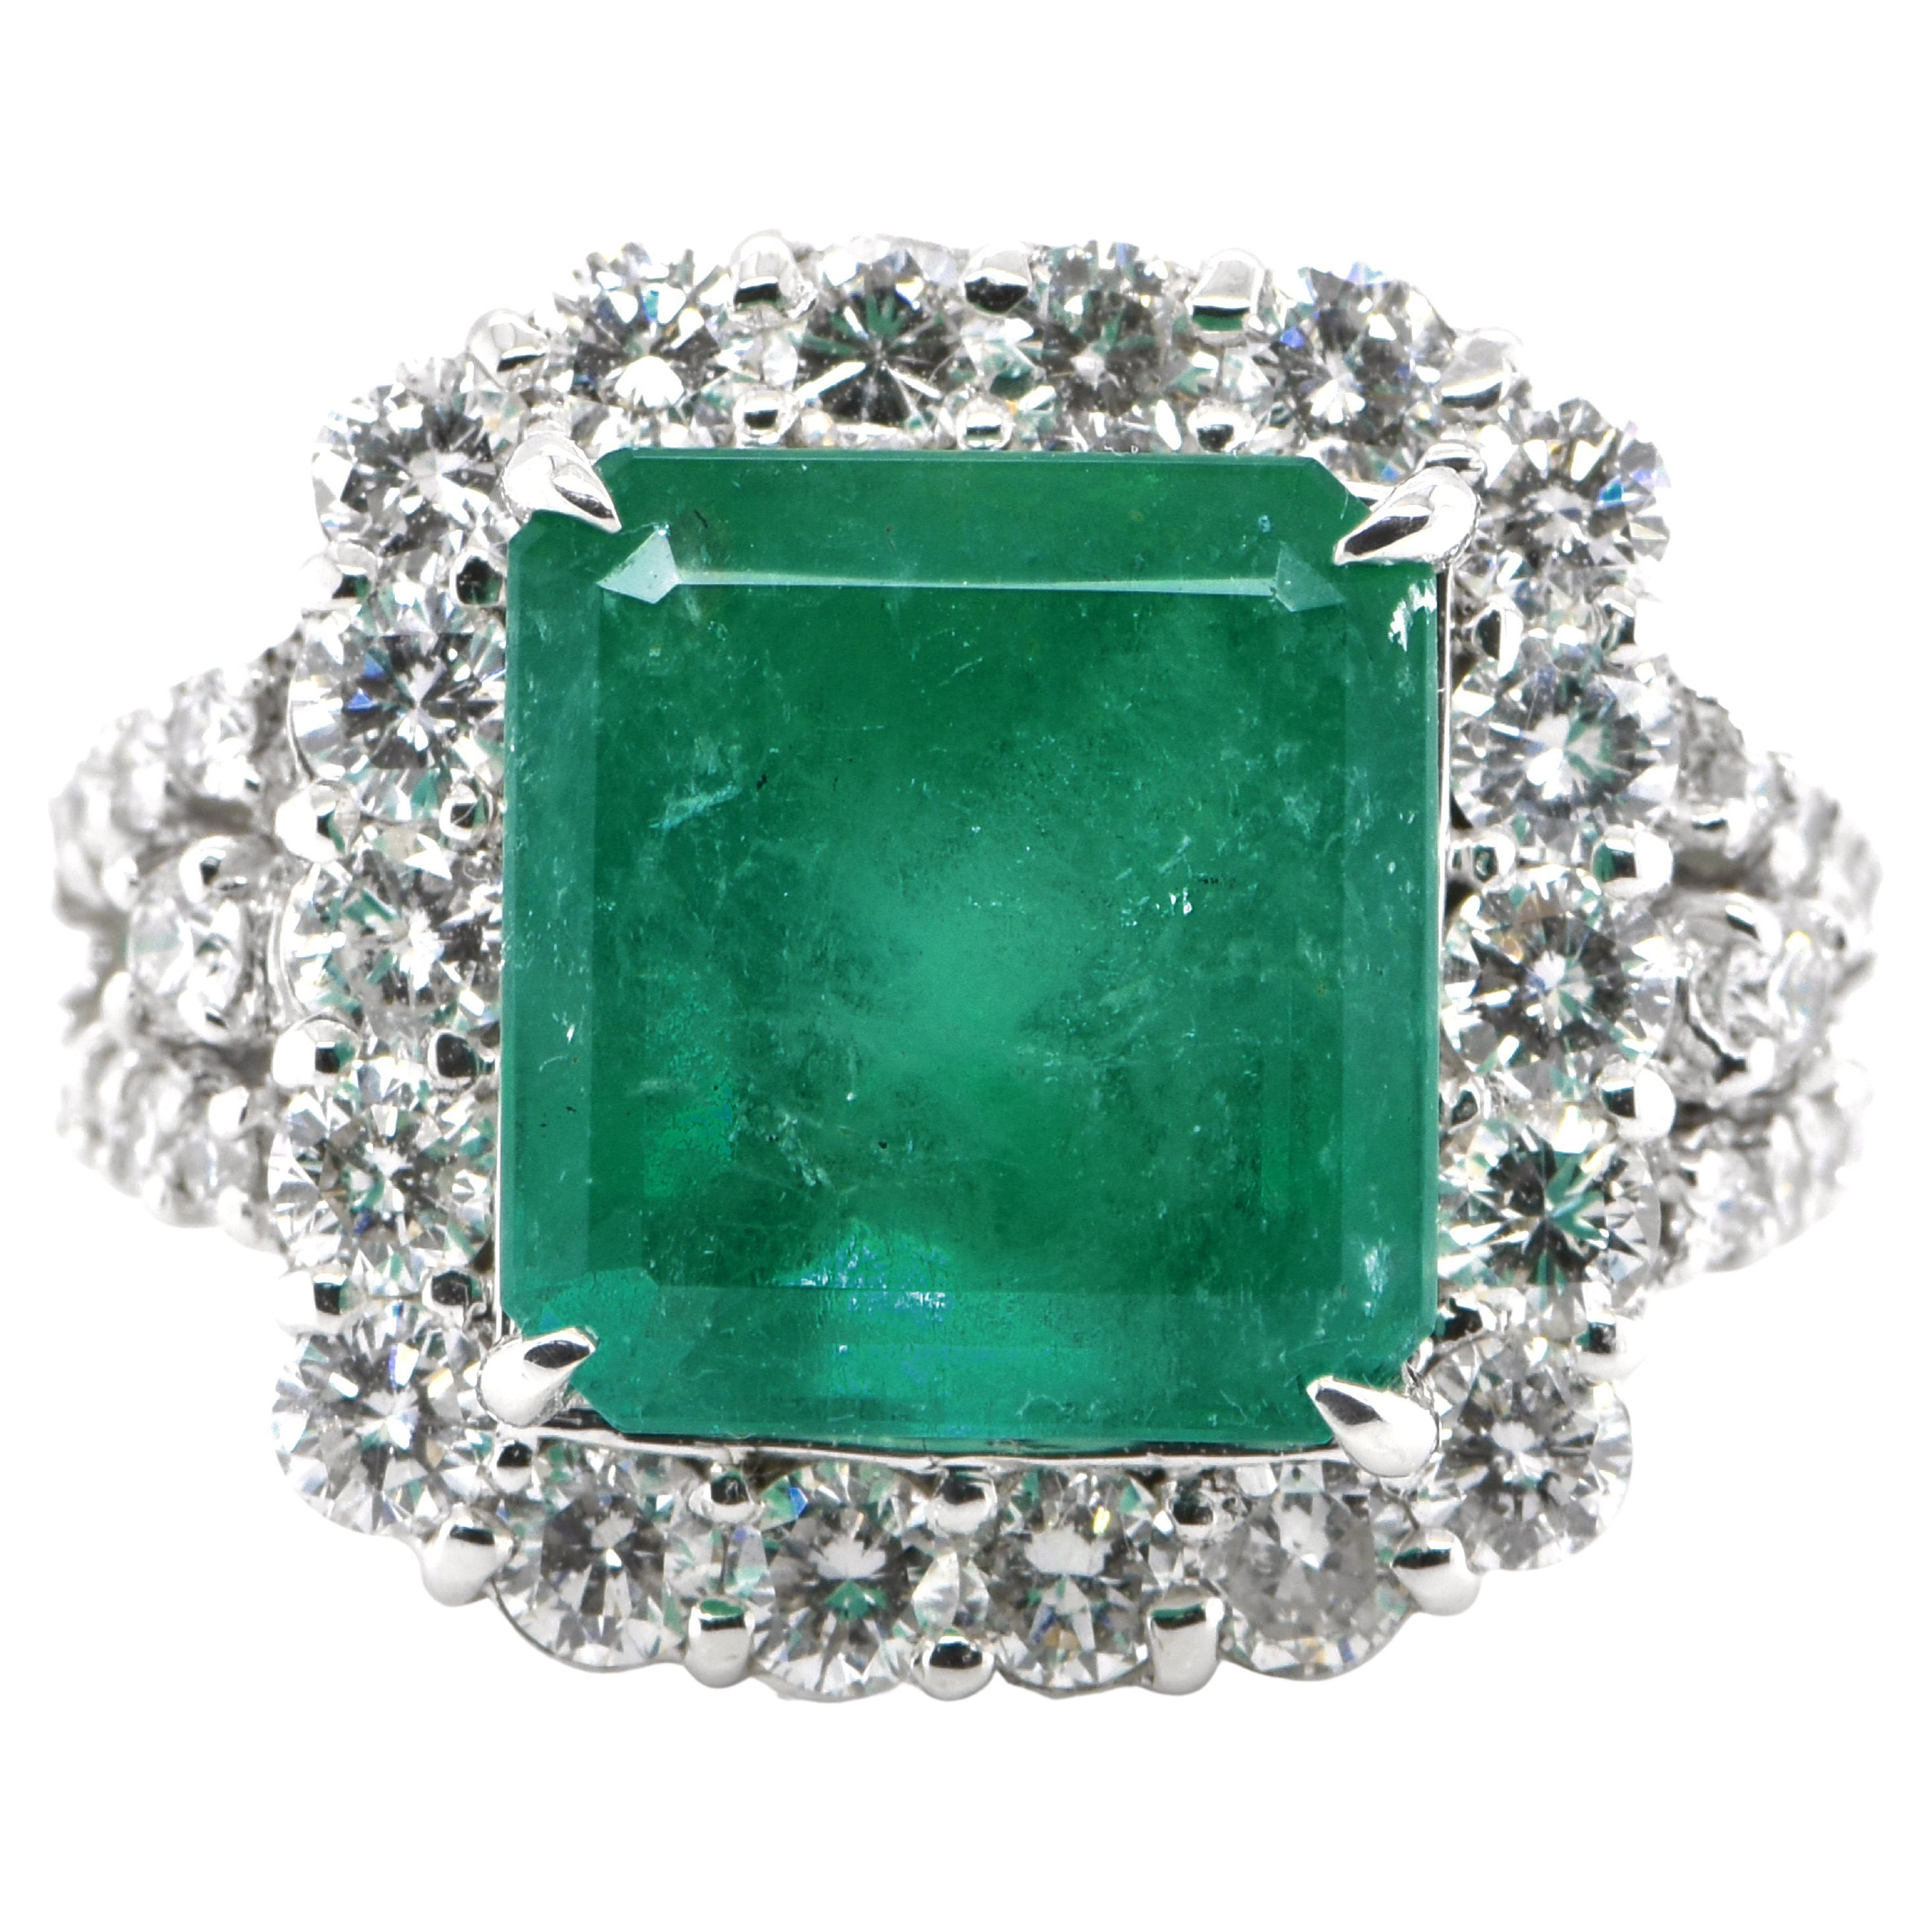 6.57 Carat Natural Emerald and Diamond Cocktail Ring Set in Platinum